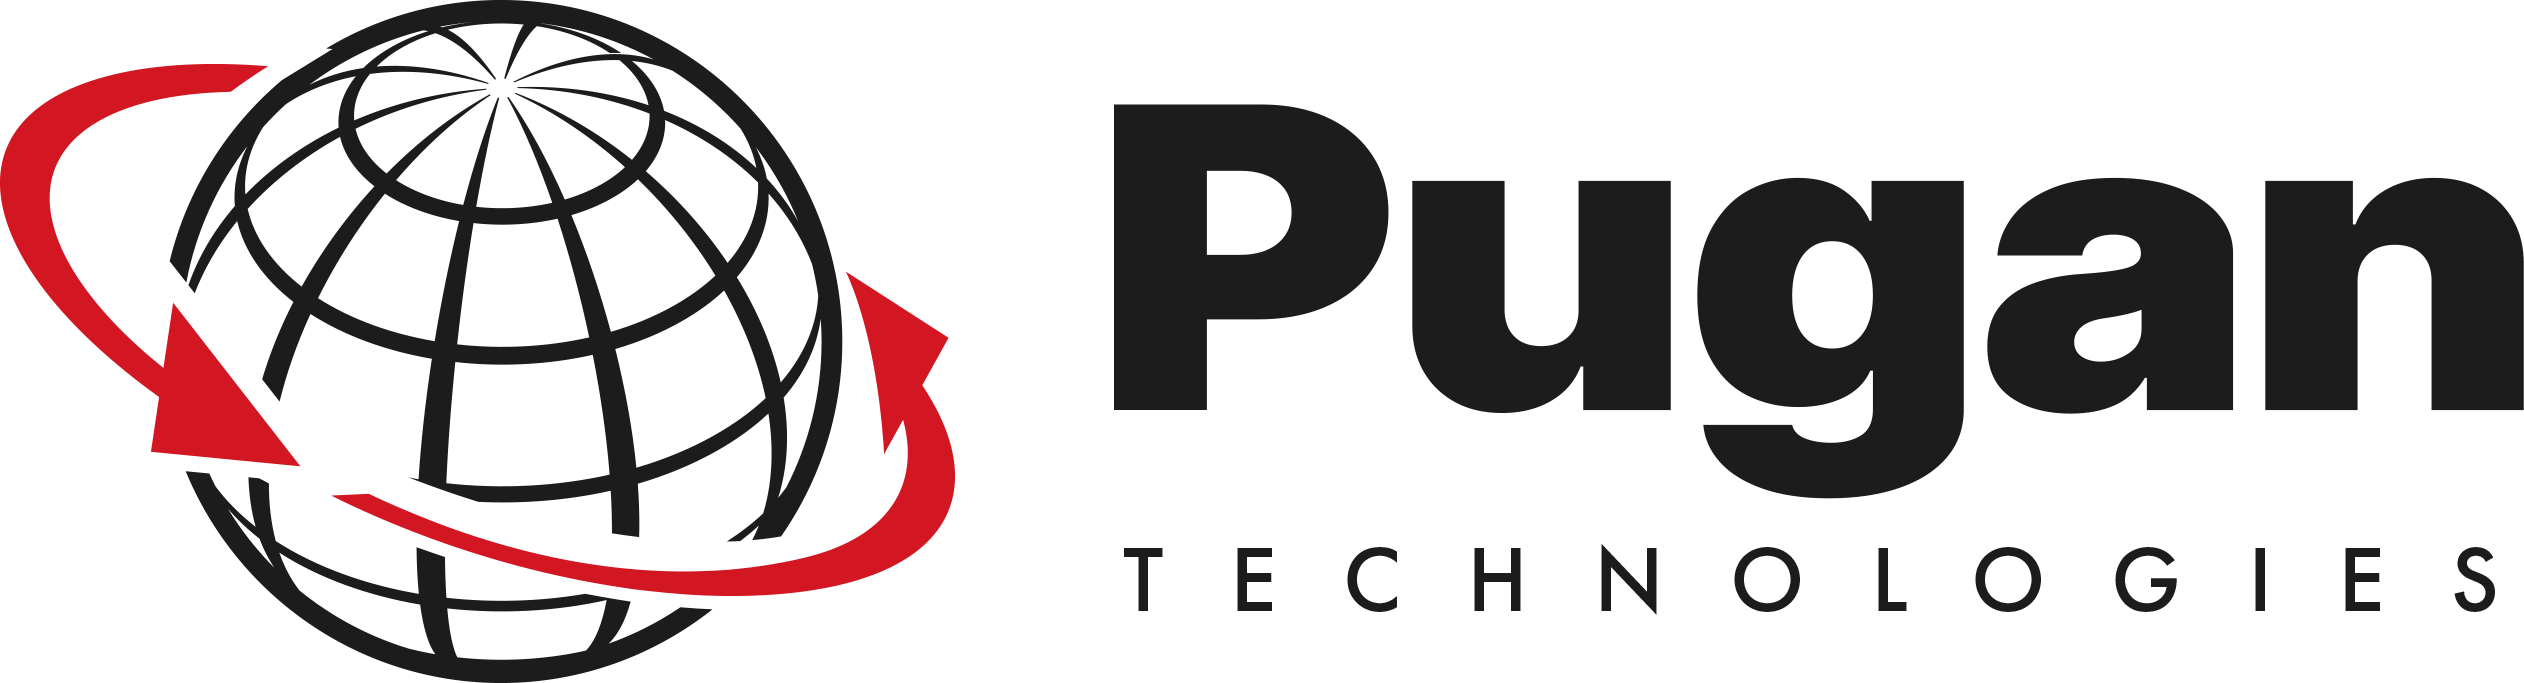 Pugan Technologies